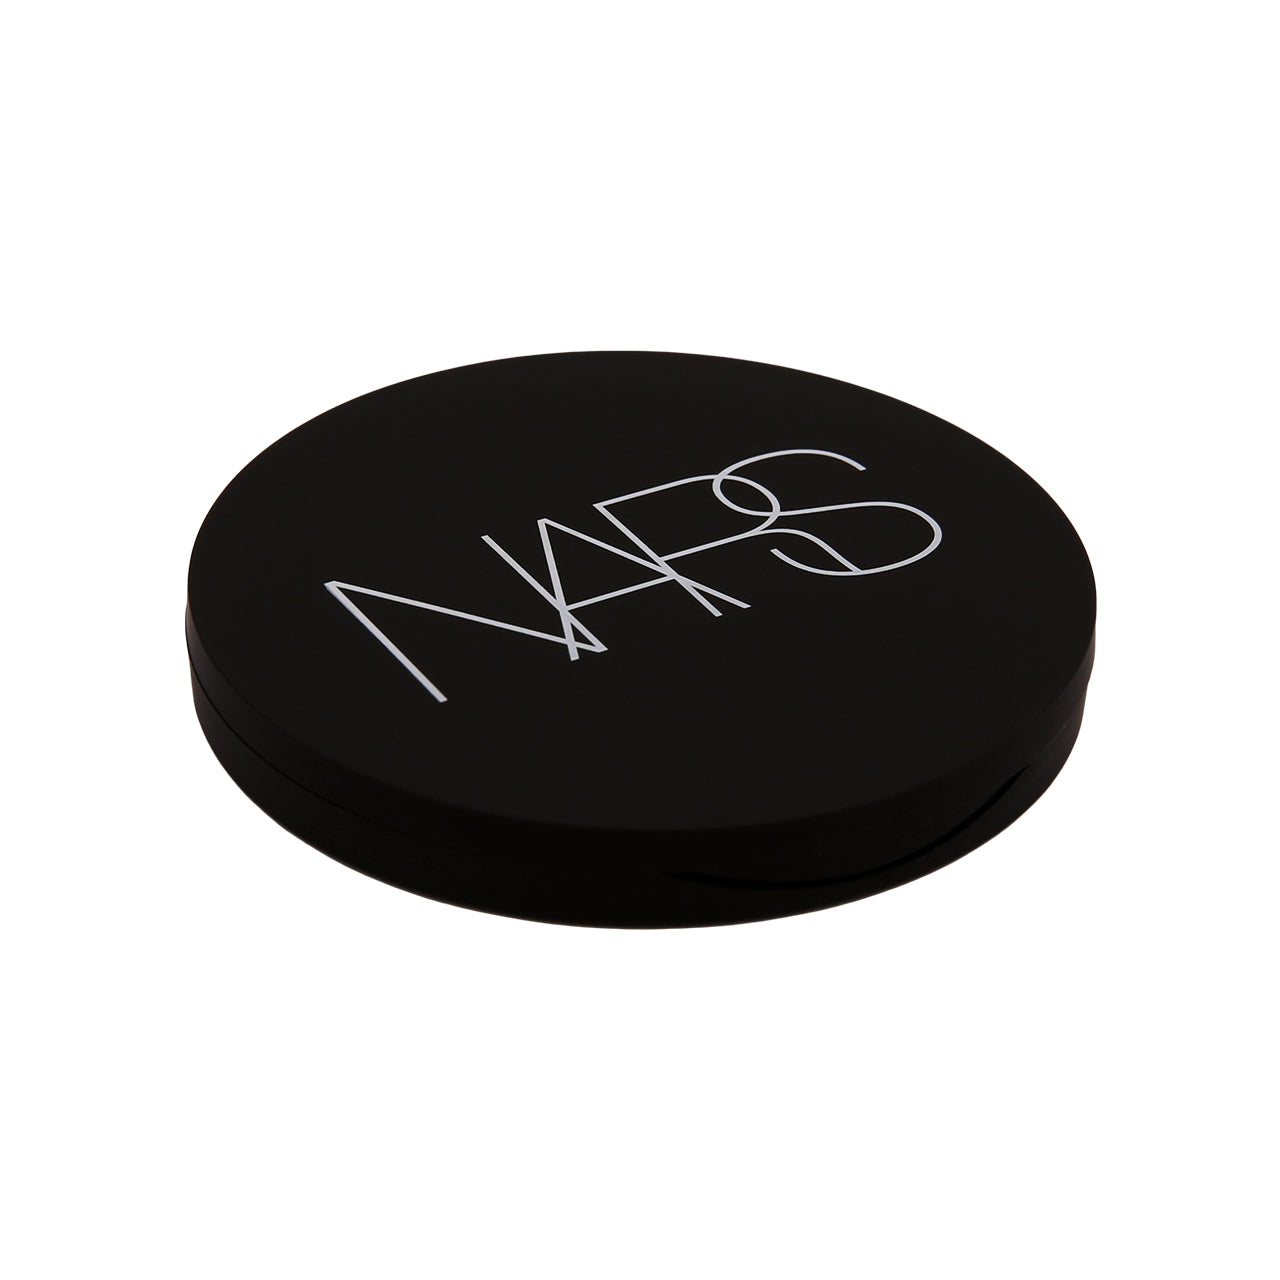 NARS Soft Matte Advanced Perfecting Powder(#Cliff) 9g | Sasa Global eShop